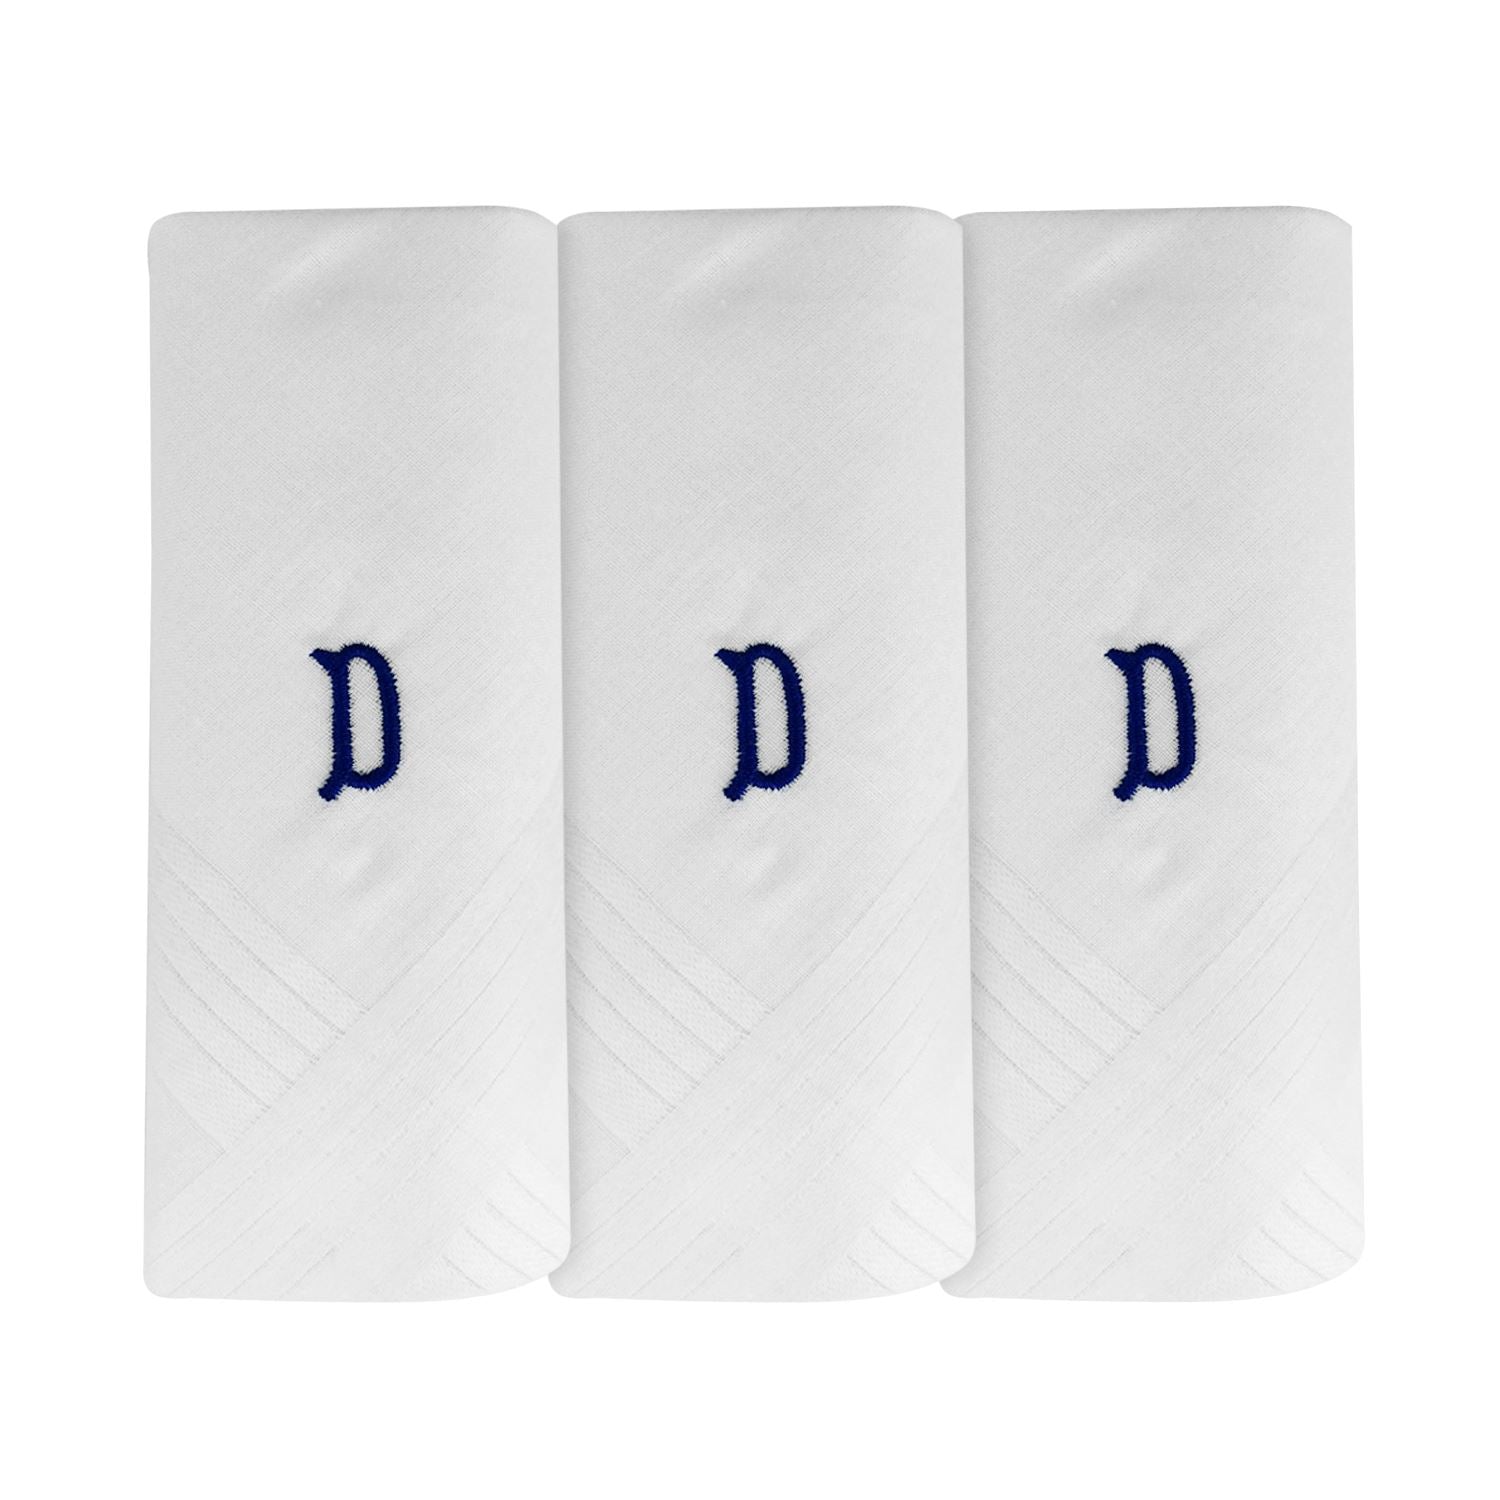 Mens 3 Pack Embroidered Initials Cotton Handkerchiefs